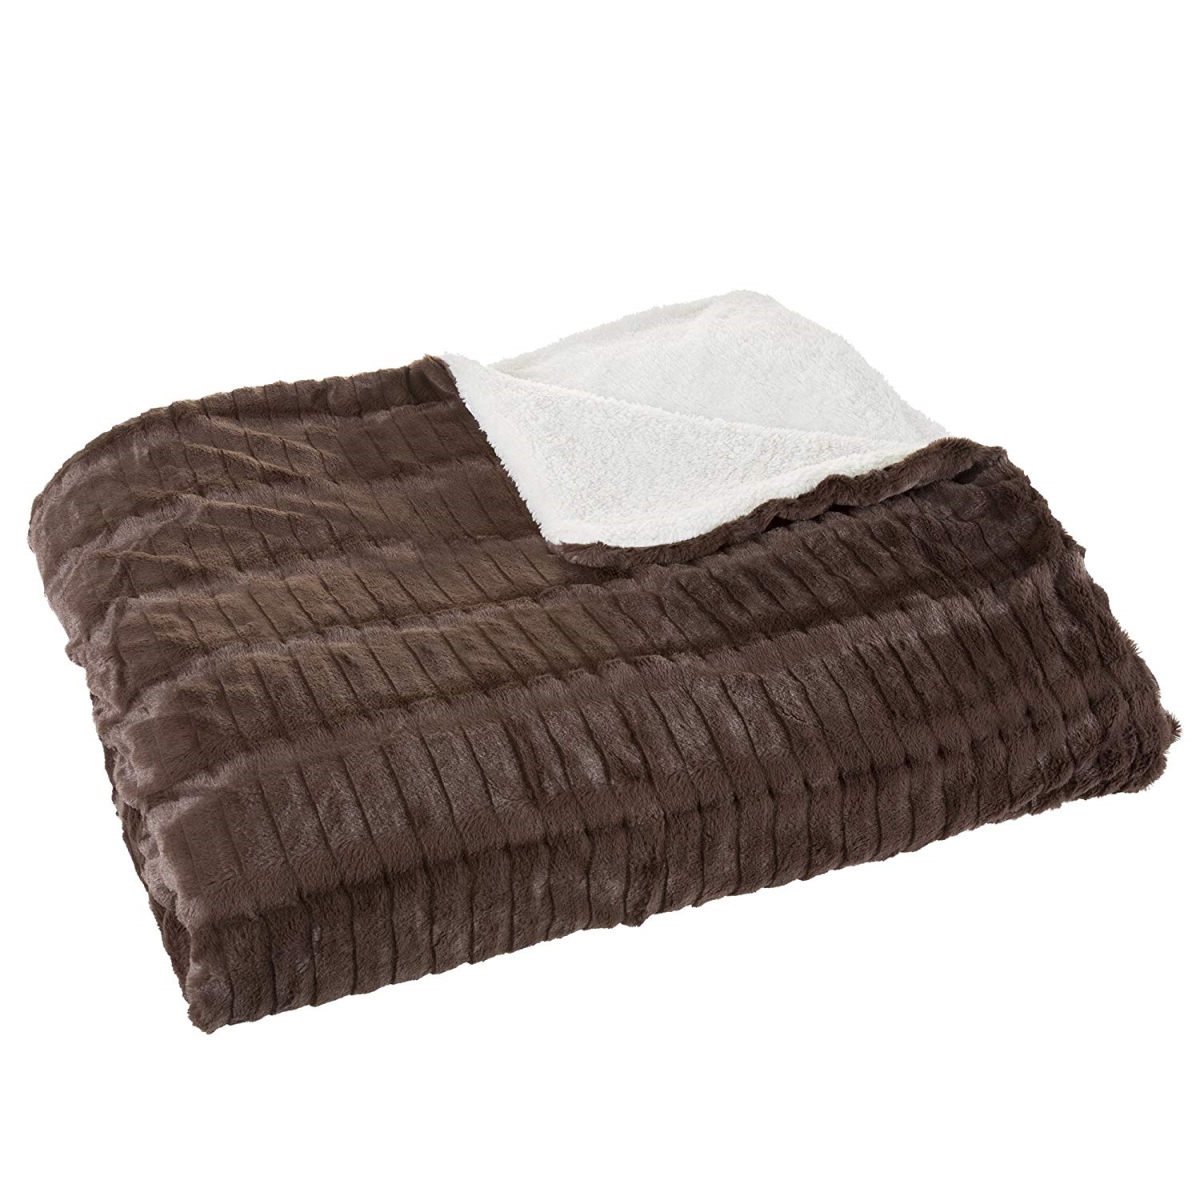 61a-01060 Fleece & Sherpa Blanket, Full & Queen Size - Chocolate